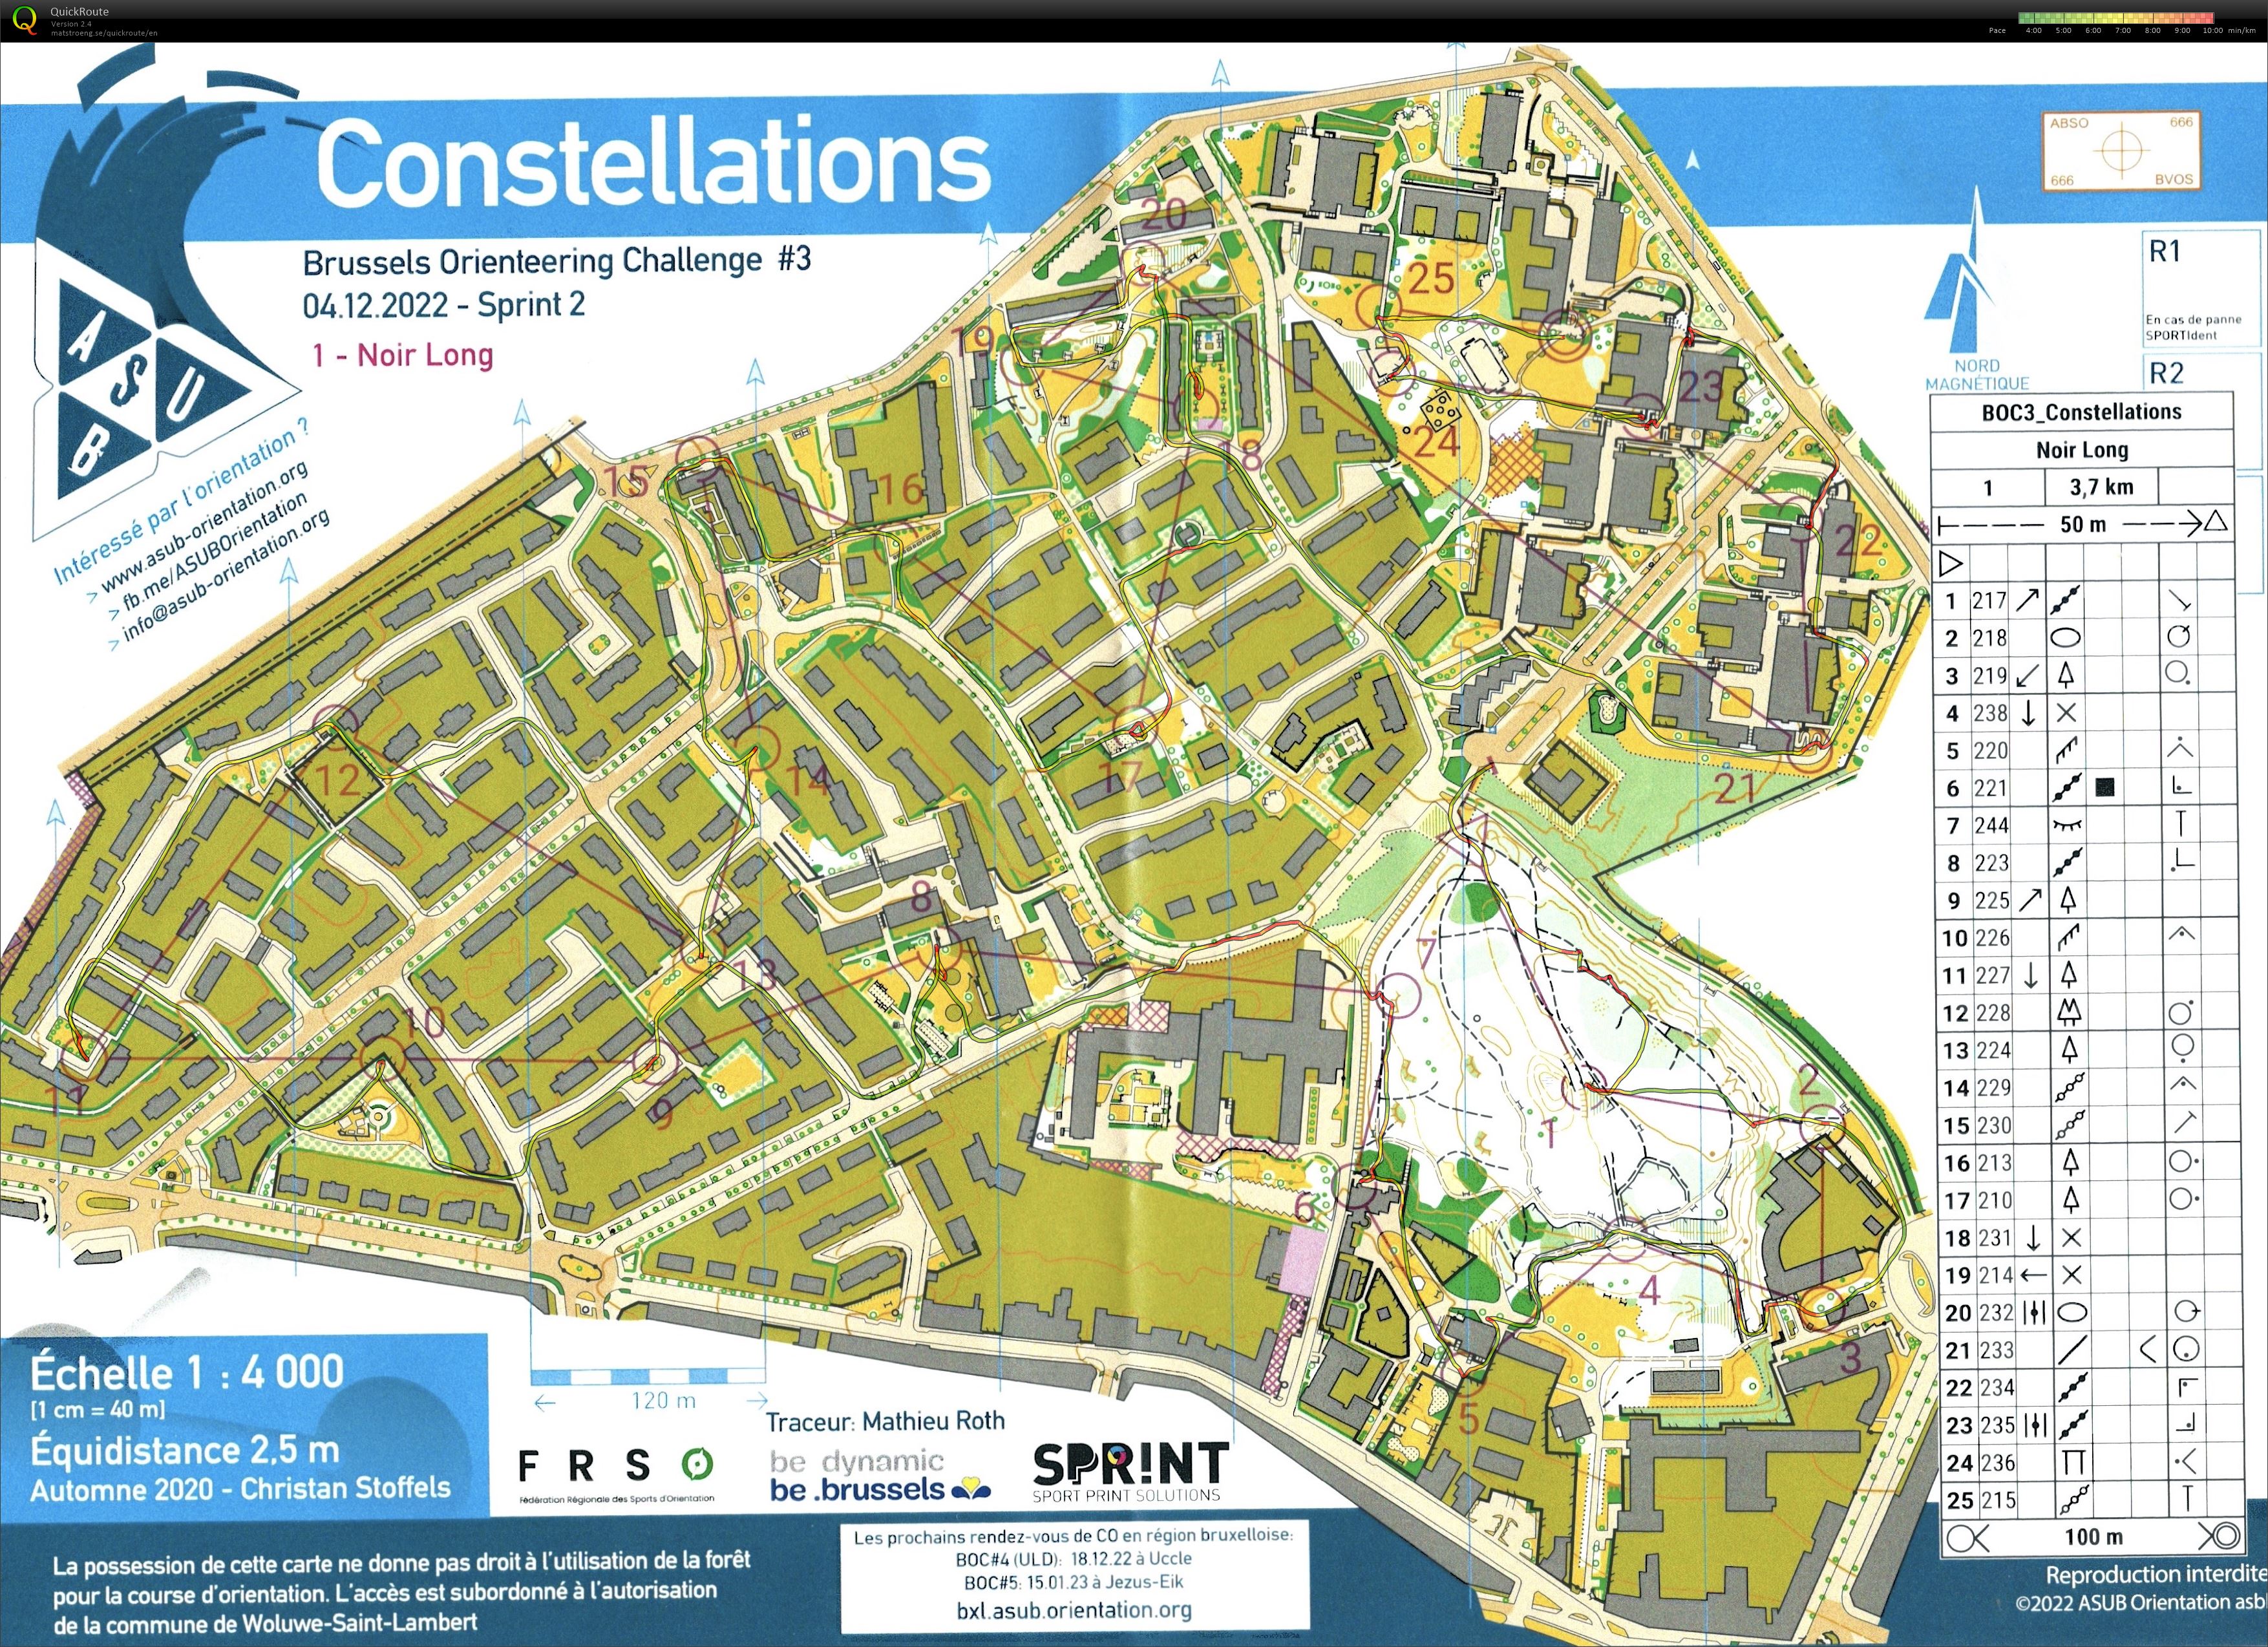 Brussels Orienteering Challenge #3 - Sprint 2 - Constellations (2022-12-04)